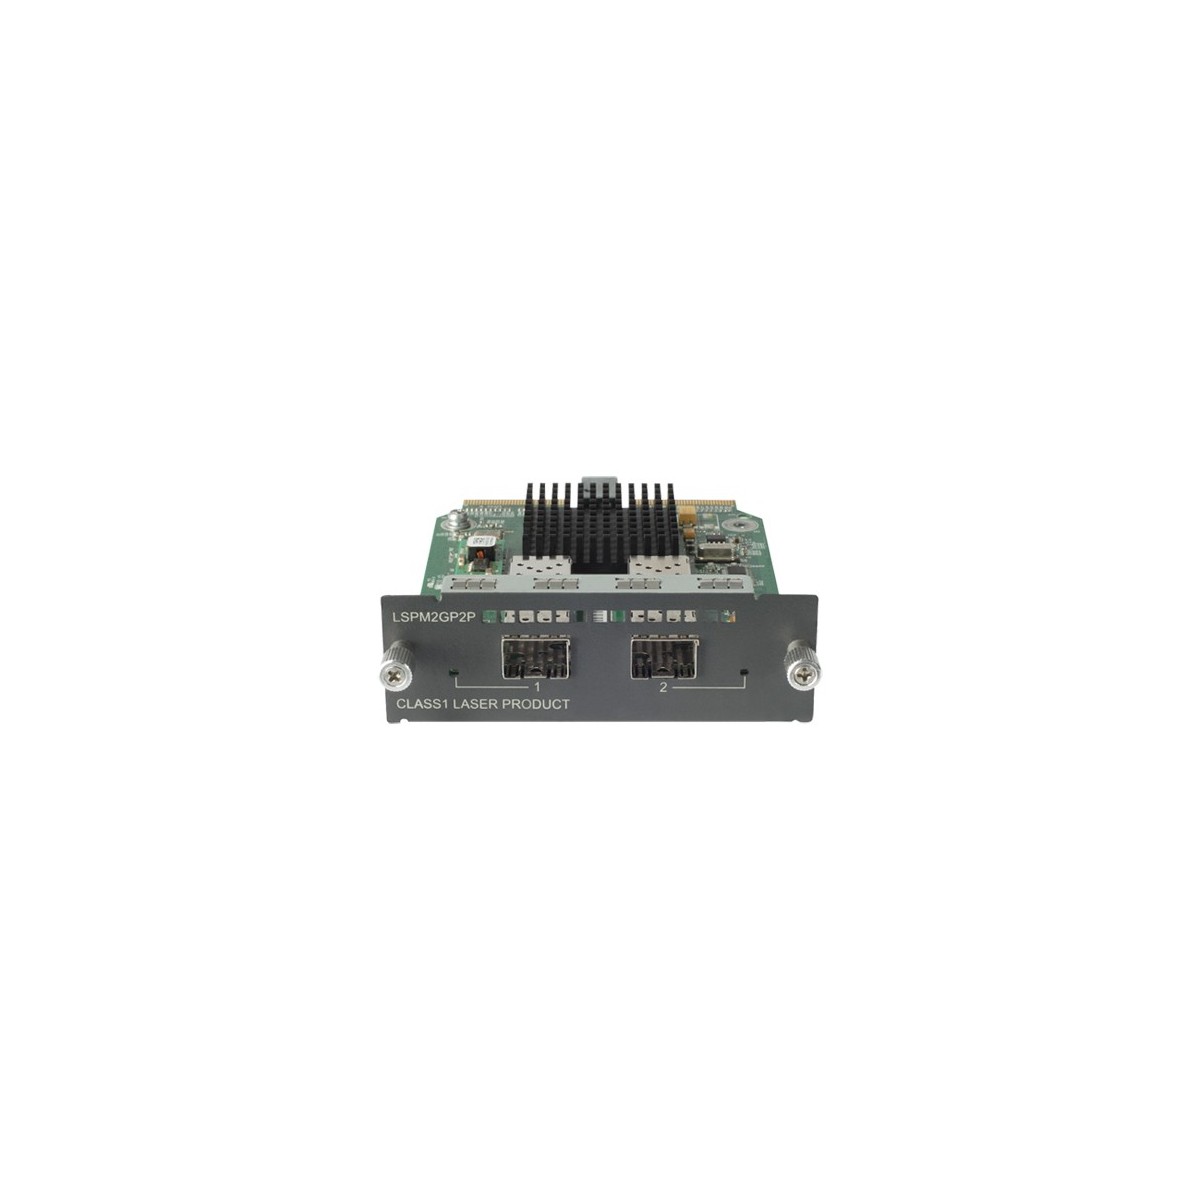 HPE 5500/4800 2-port GbE SFP Module - Gigabit Ethernet - 10,100,1000 Mbit/s - SFP - HP 5500/4800 - 2 x SFP (mini-GBIC)